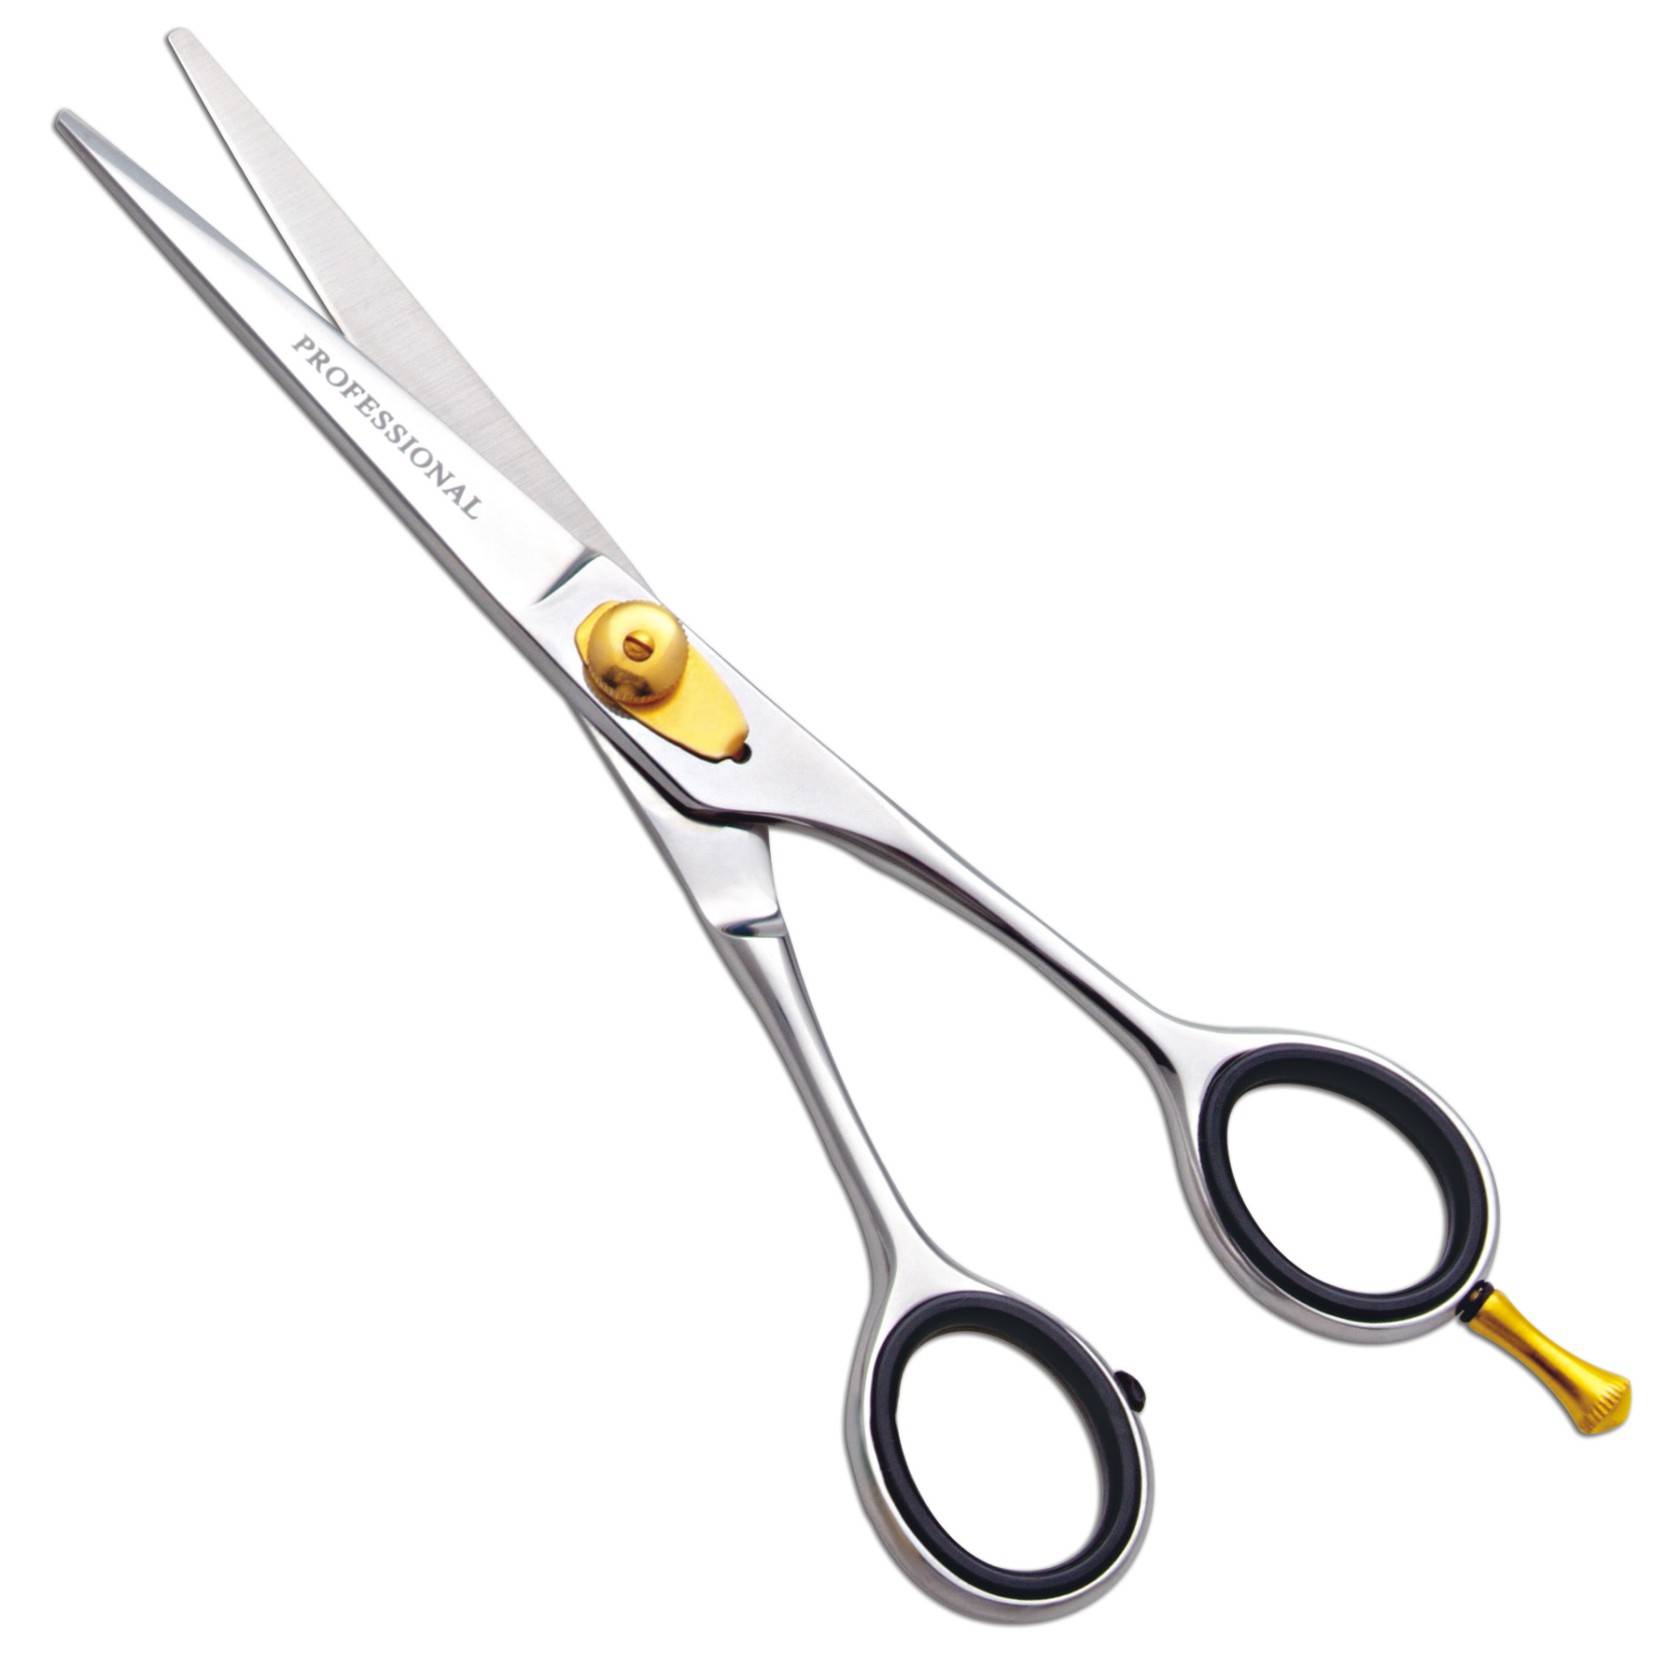 Stag Hair Cutting Scissors